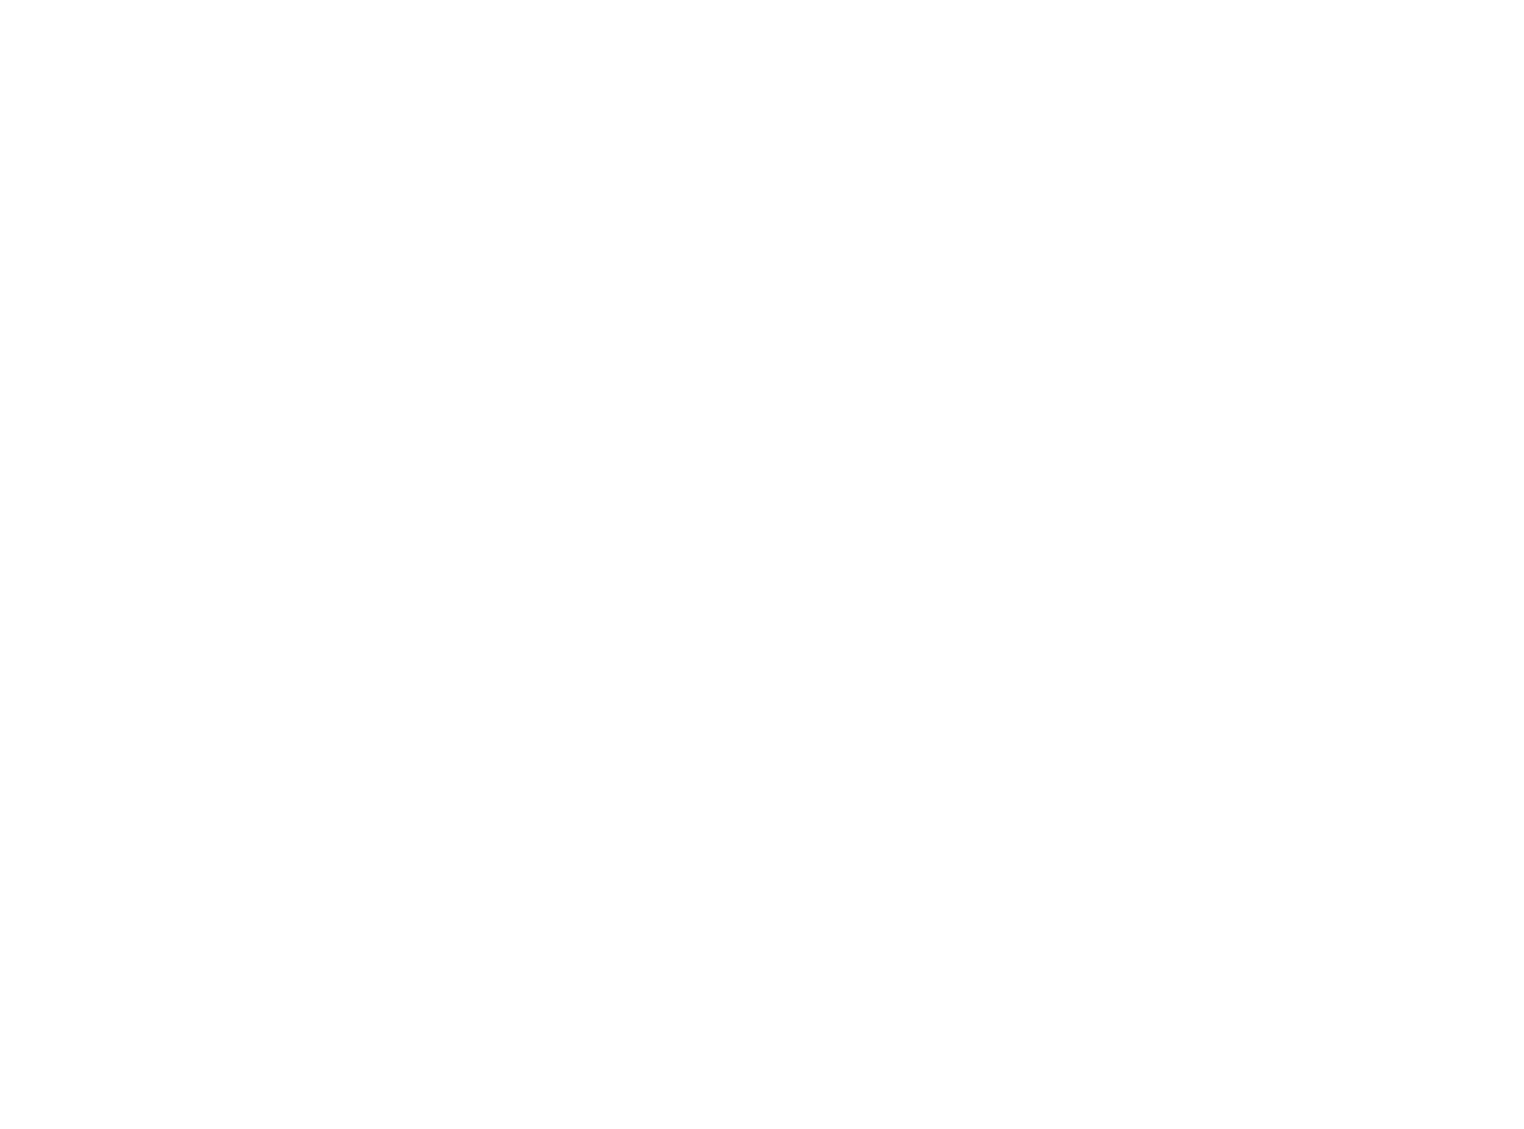 Sopra Steria Group logo pour fonds sombres (PNG transparent)